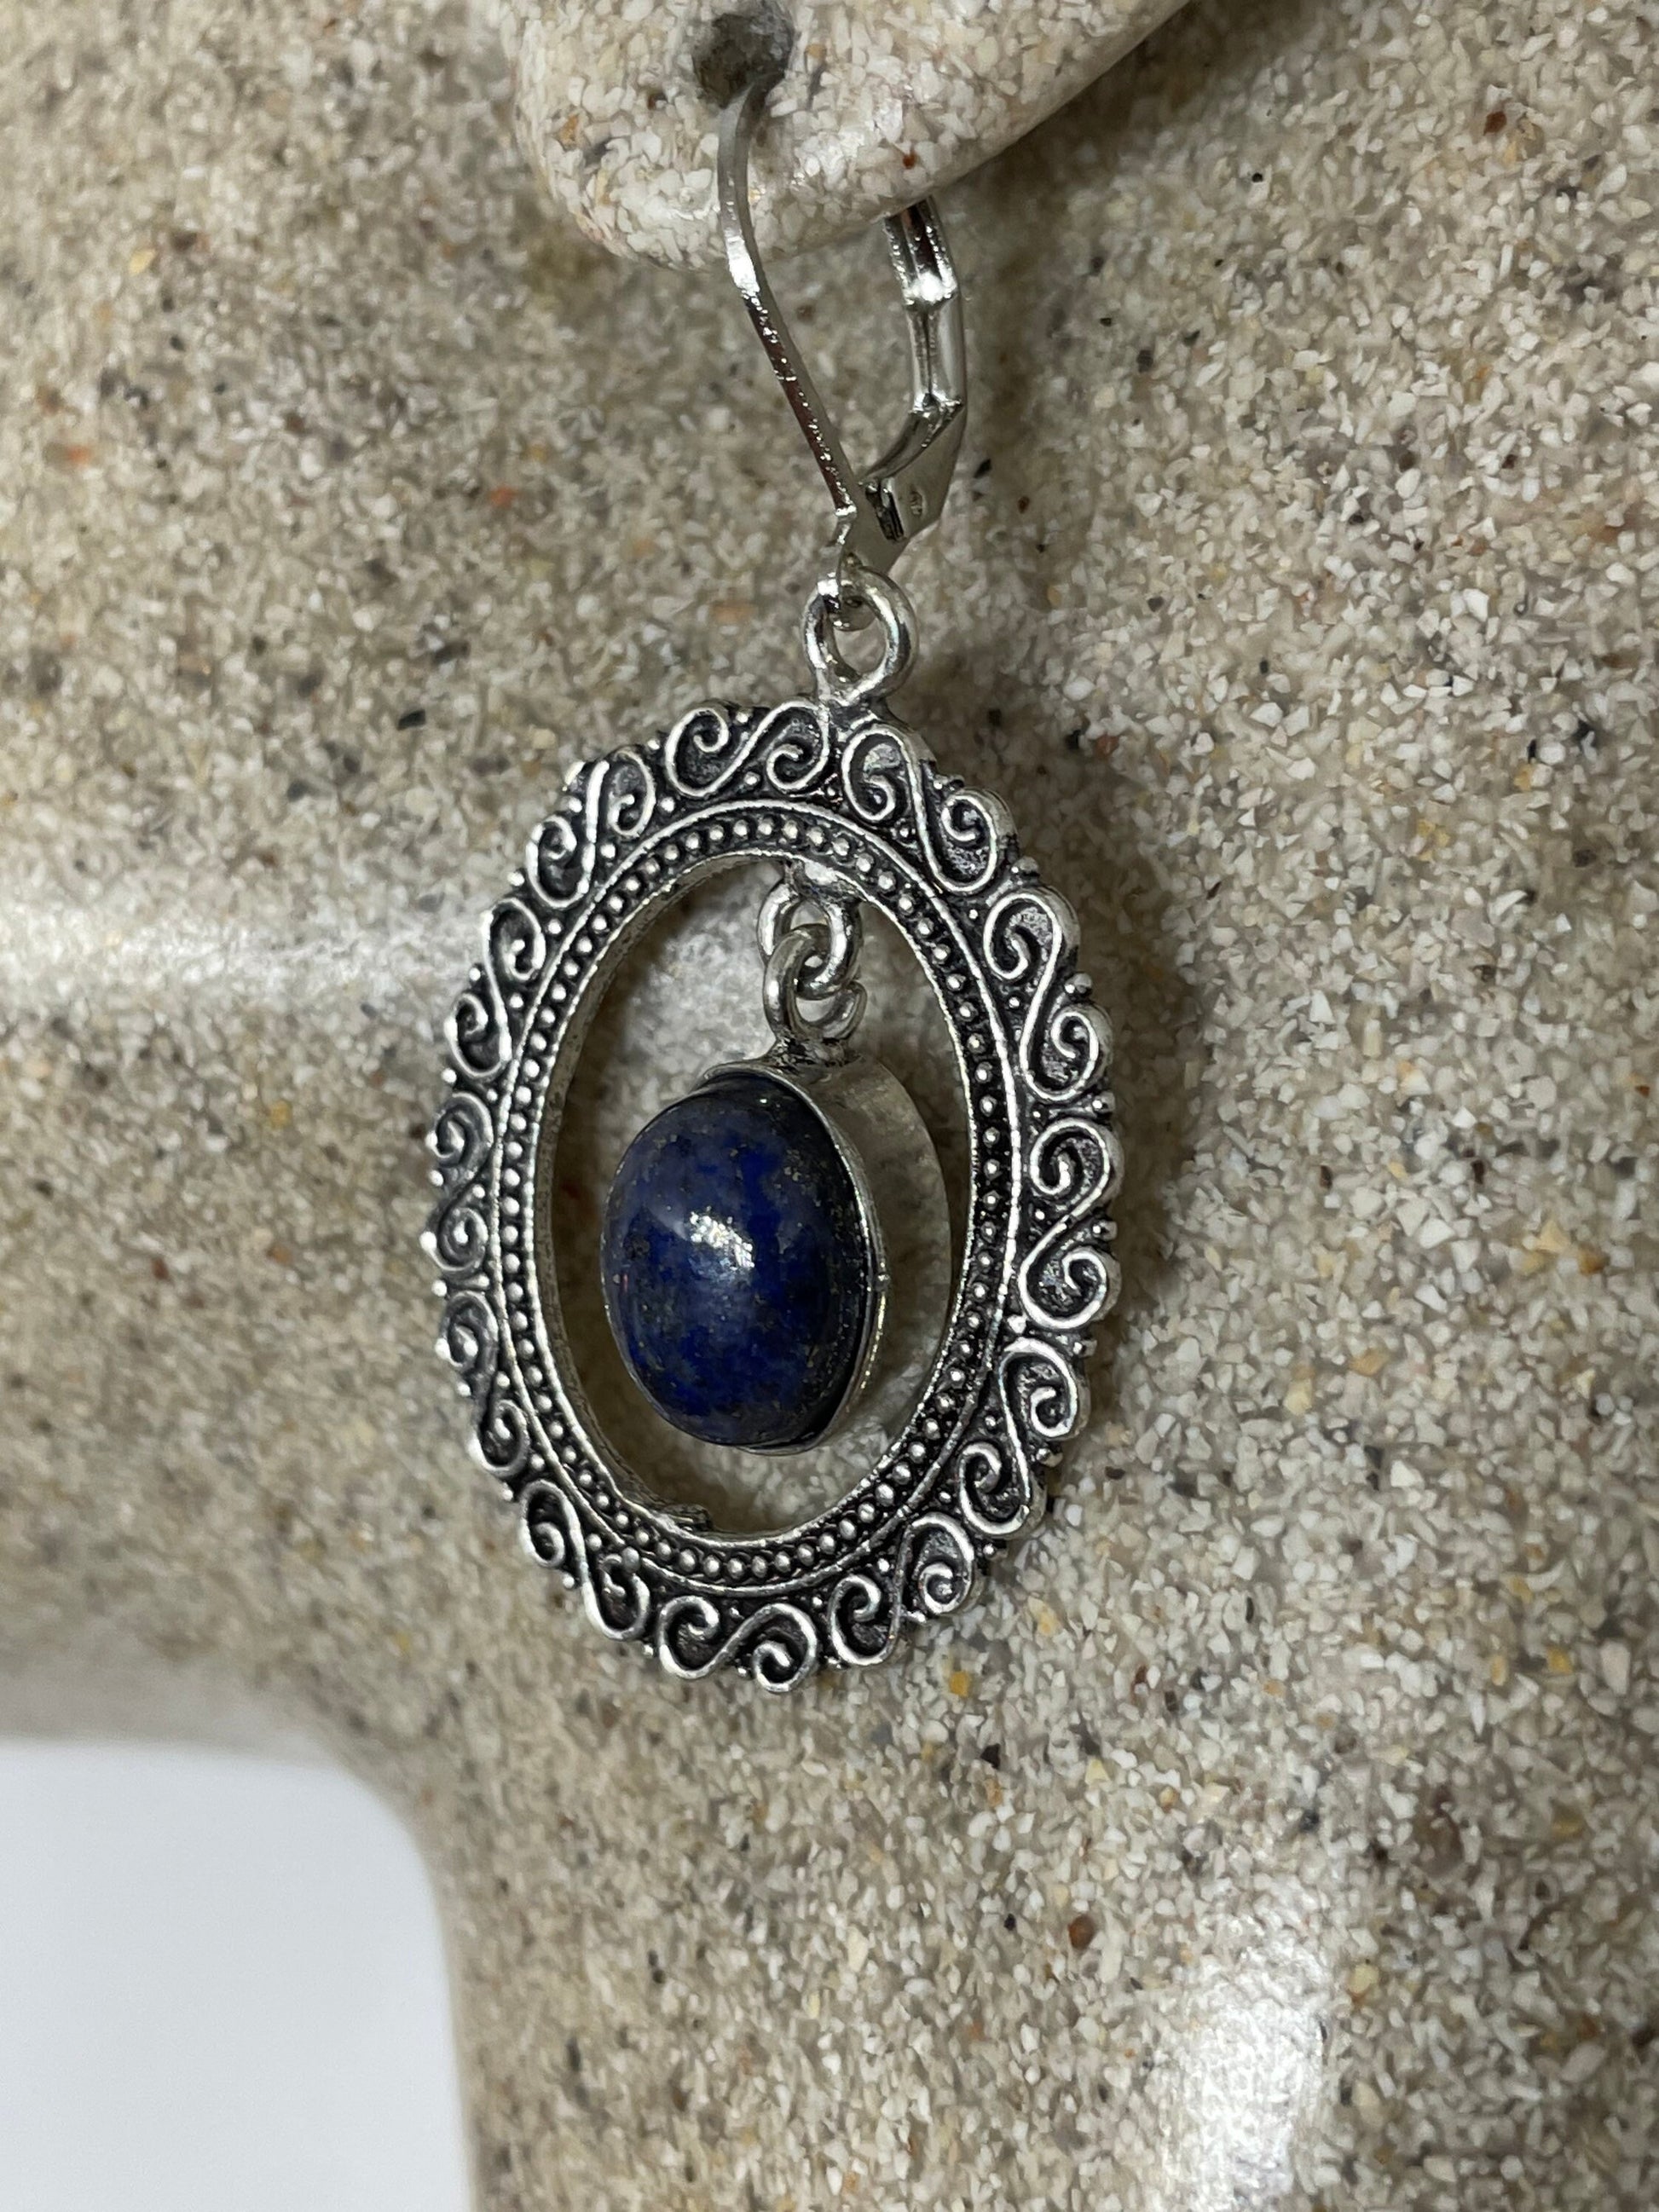 Vintage Blue Lapis Lazuli Earrings Silver Dangle